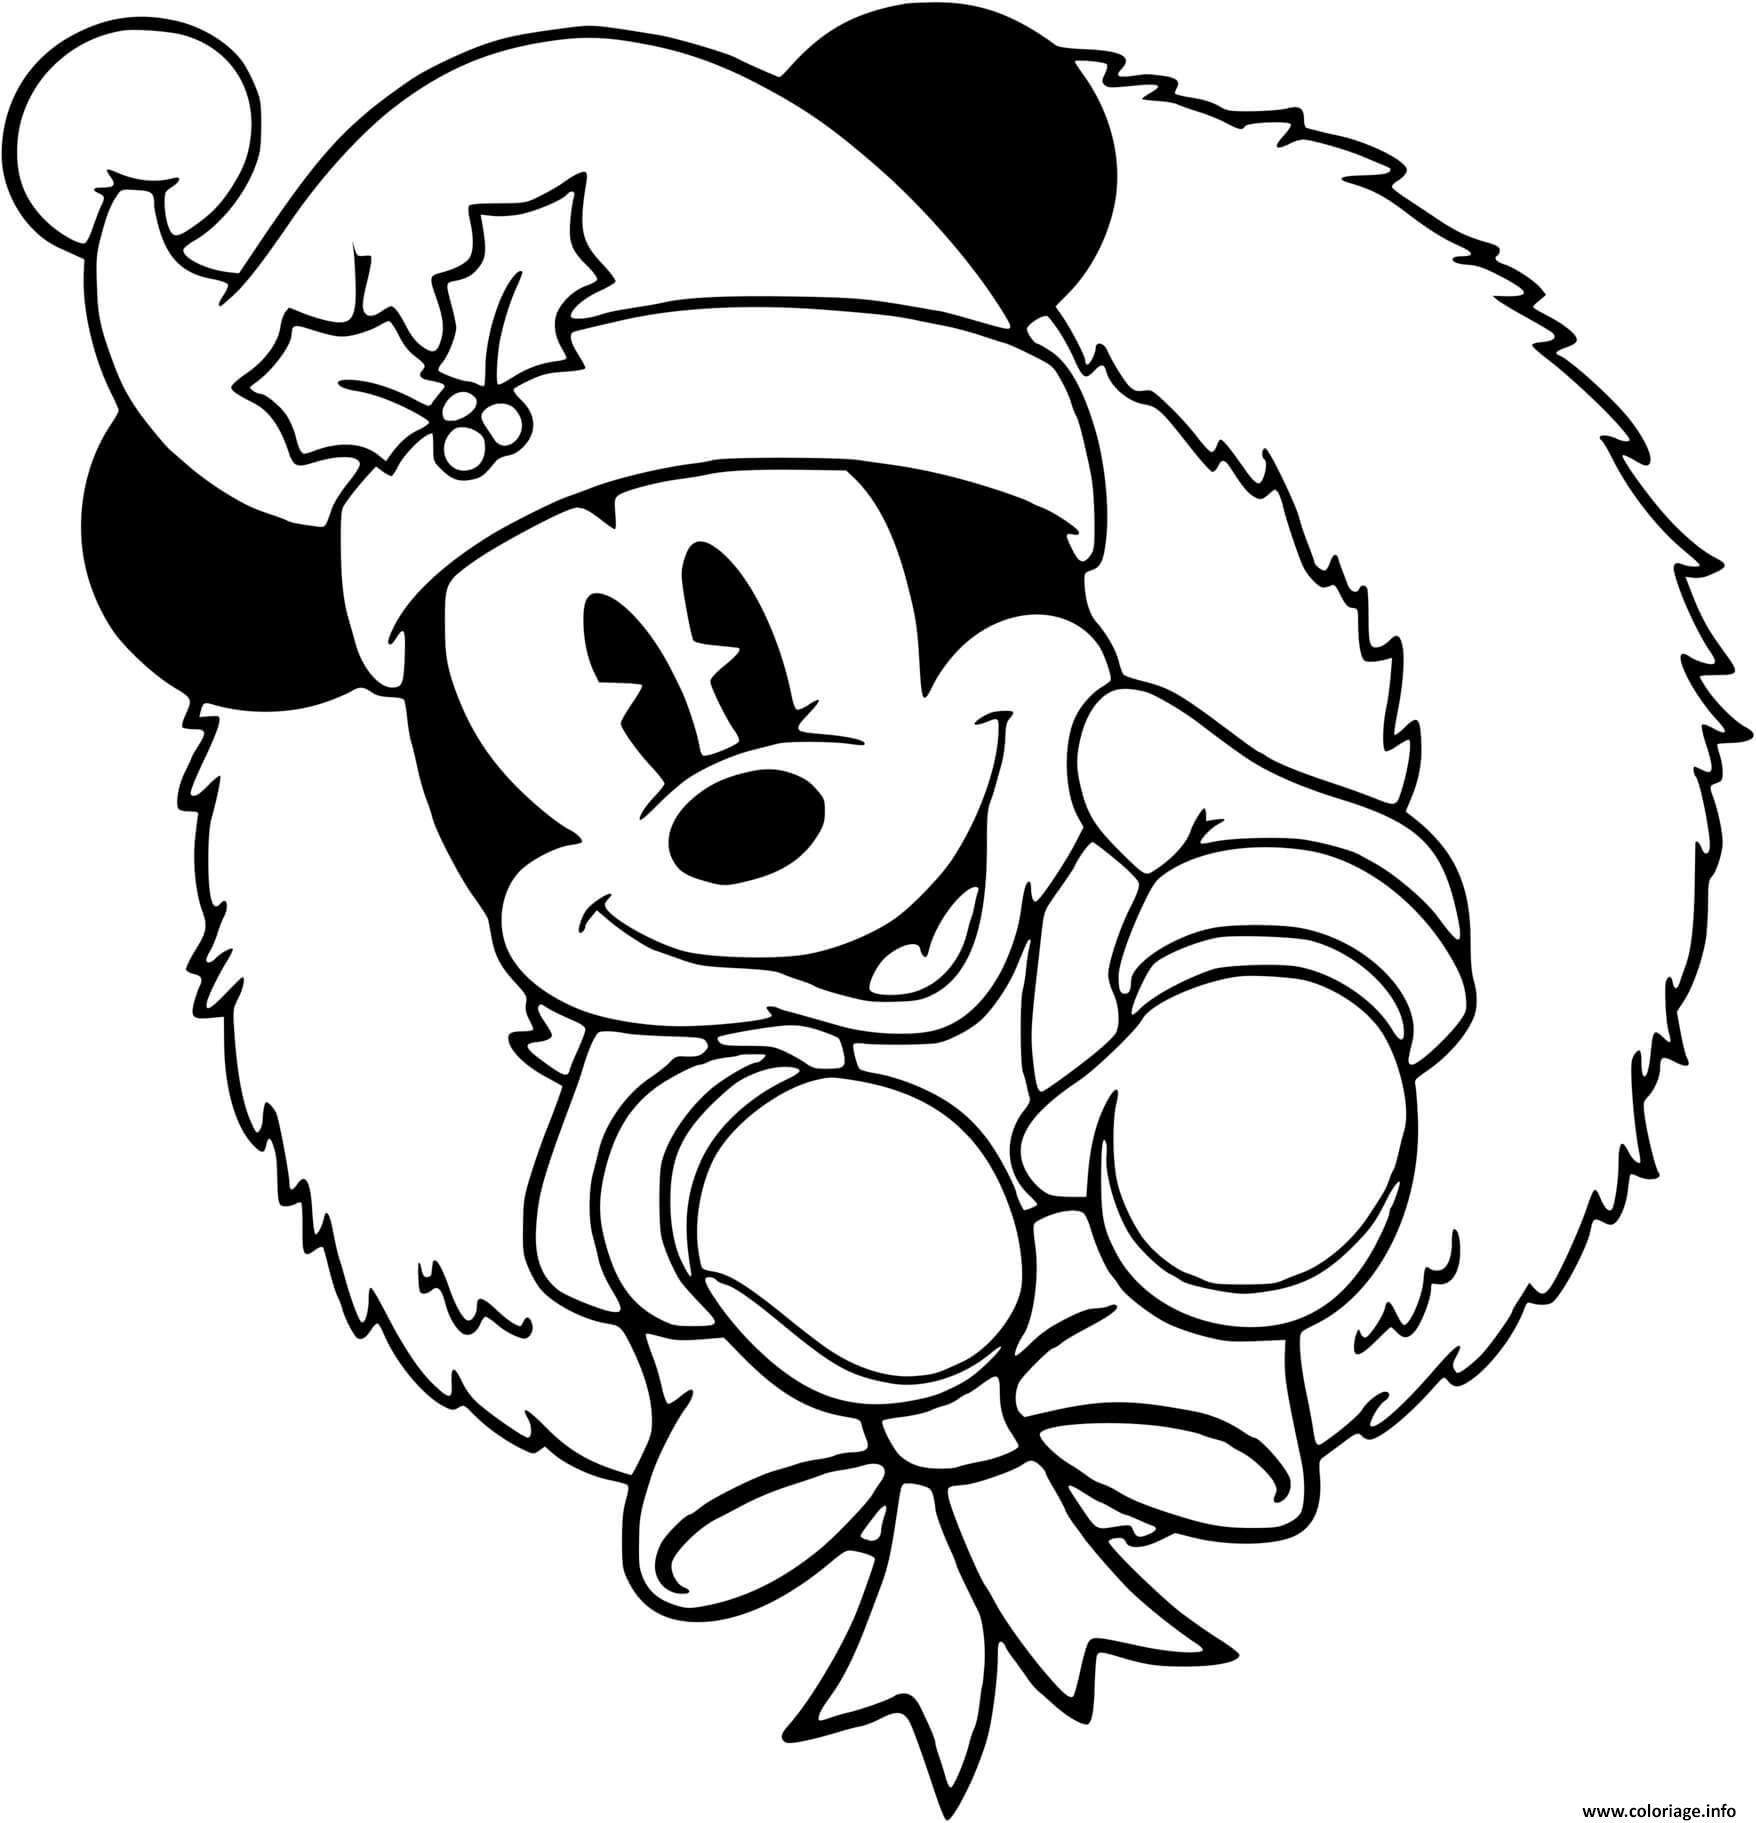 Coloriage Classic Mickey In A Wreath Dessin Noel Disney À Imprimer encequiconcerne Noel Dessin Images 